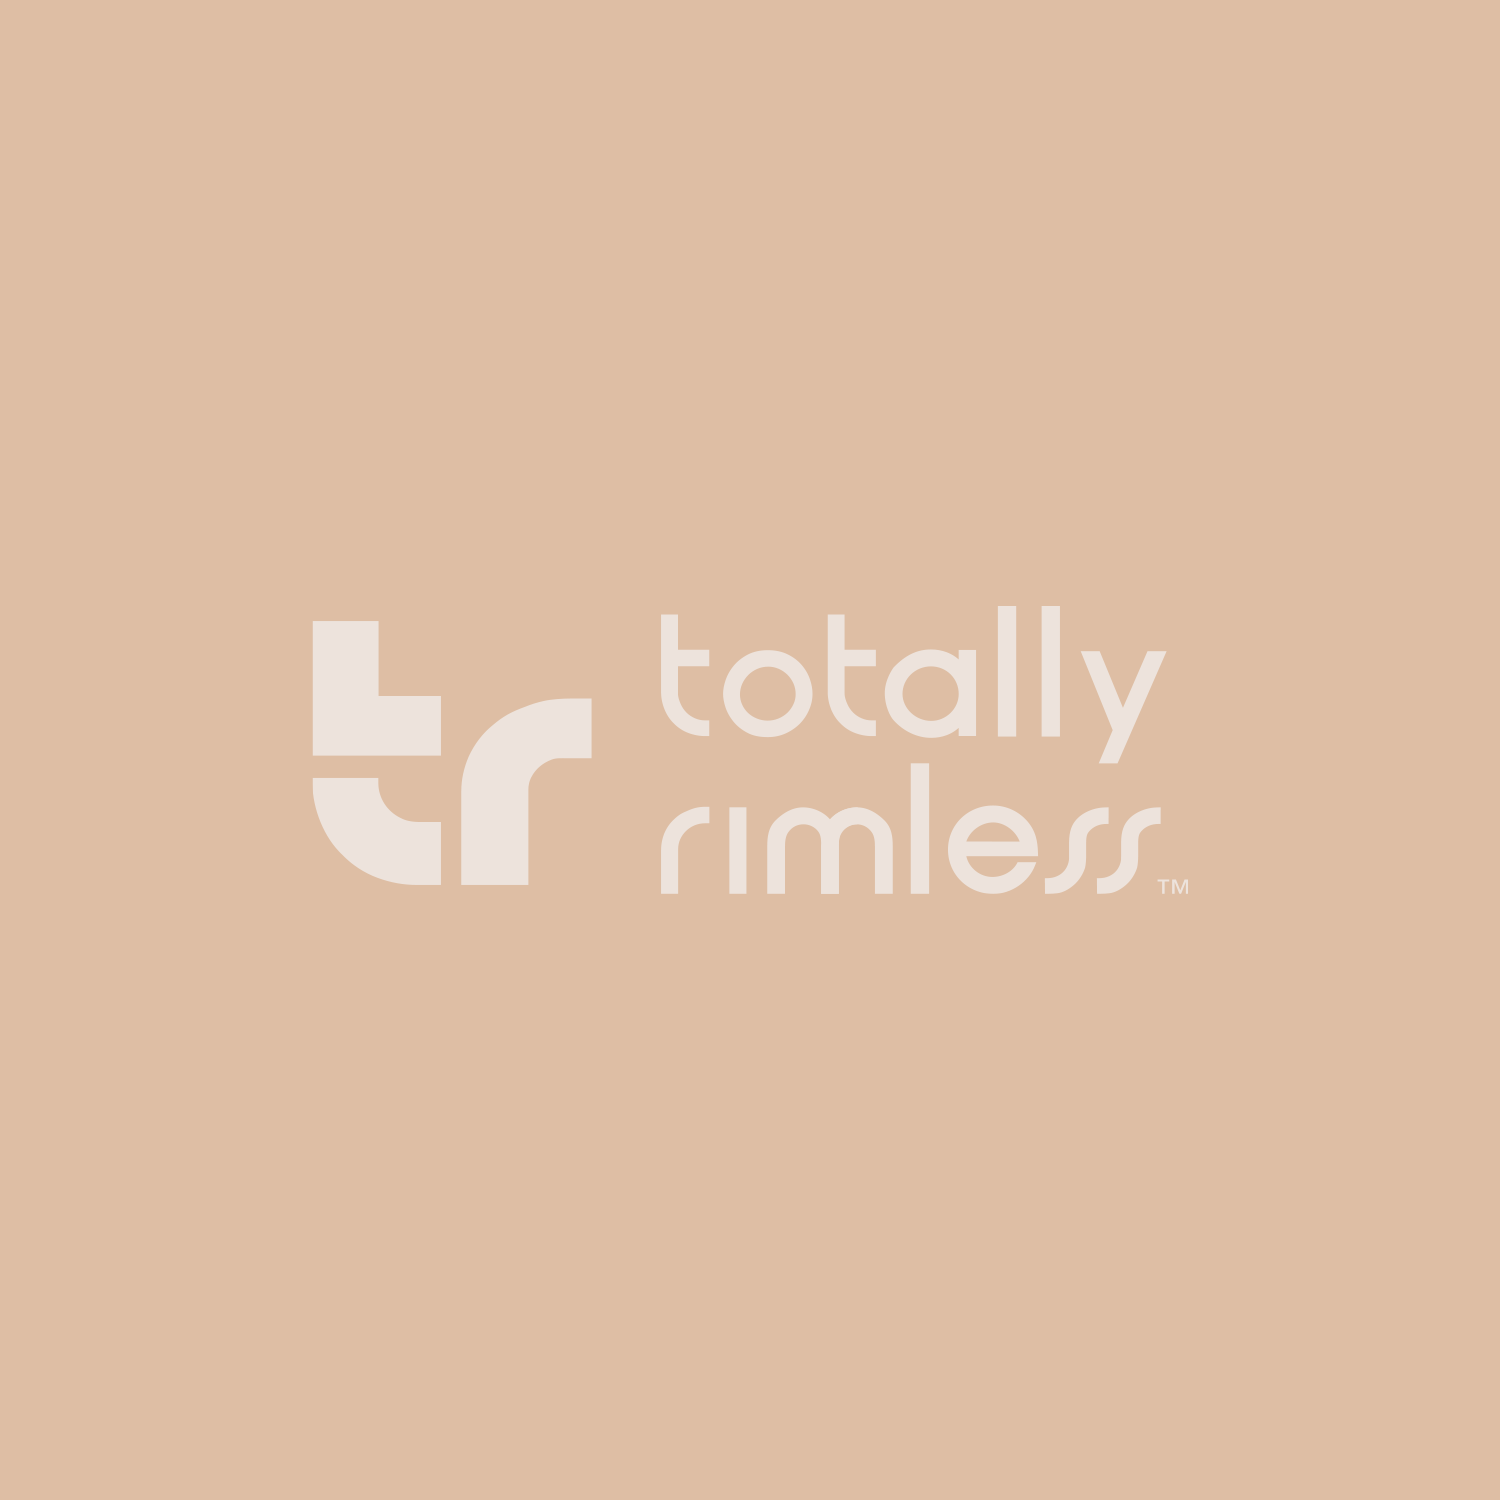 Totally Rimless - logo Color